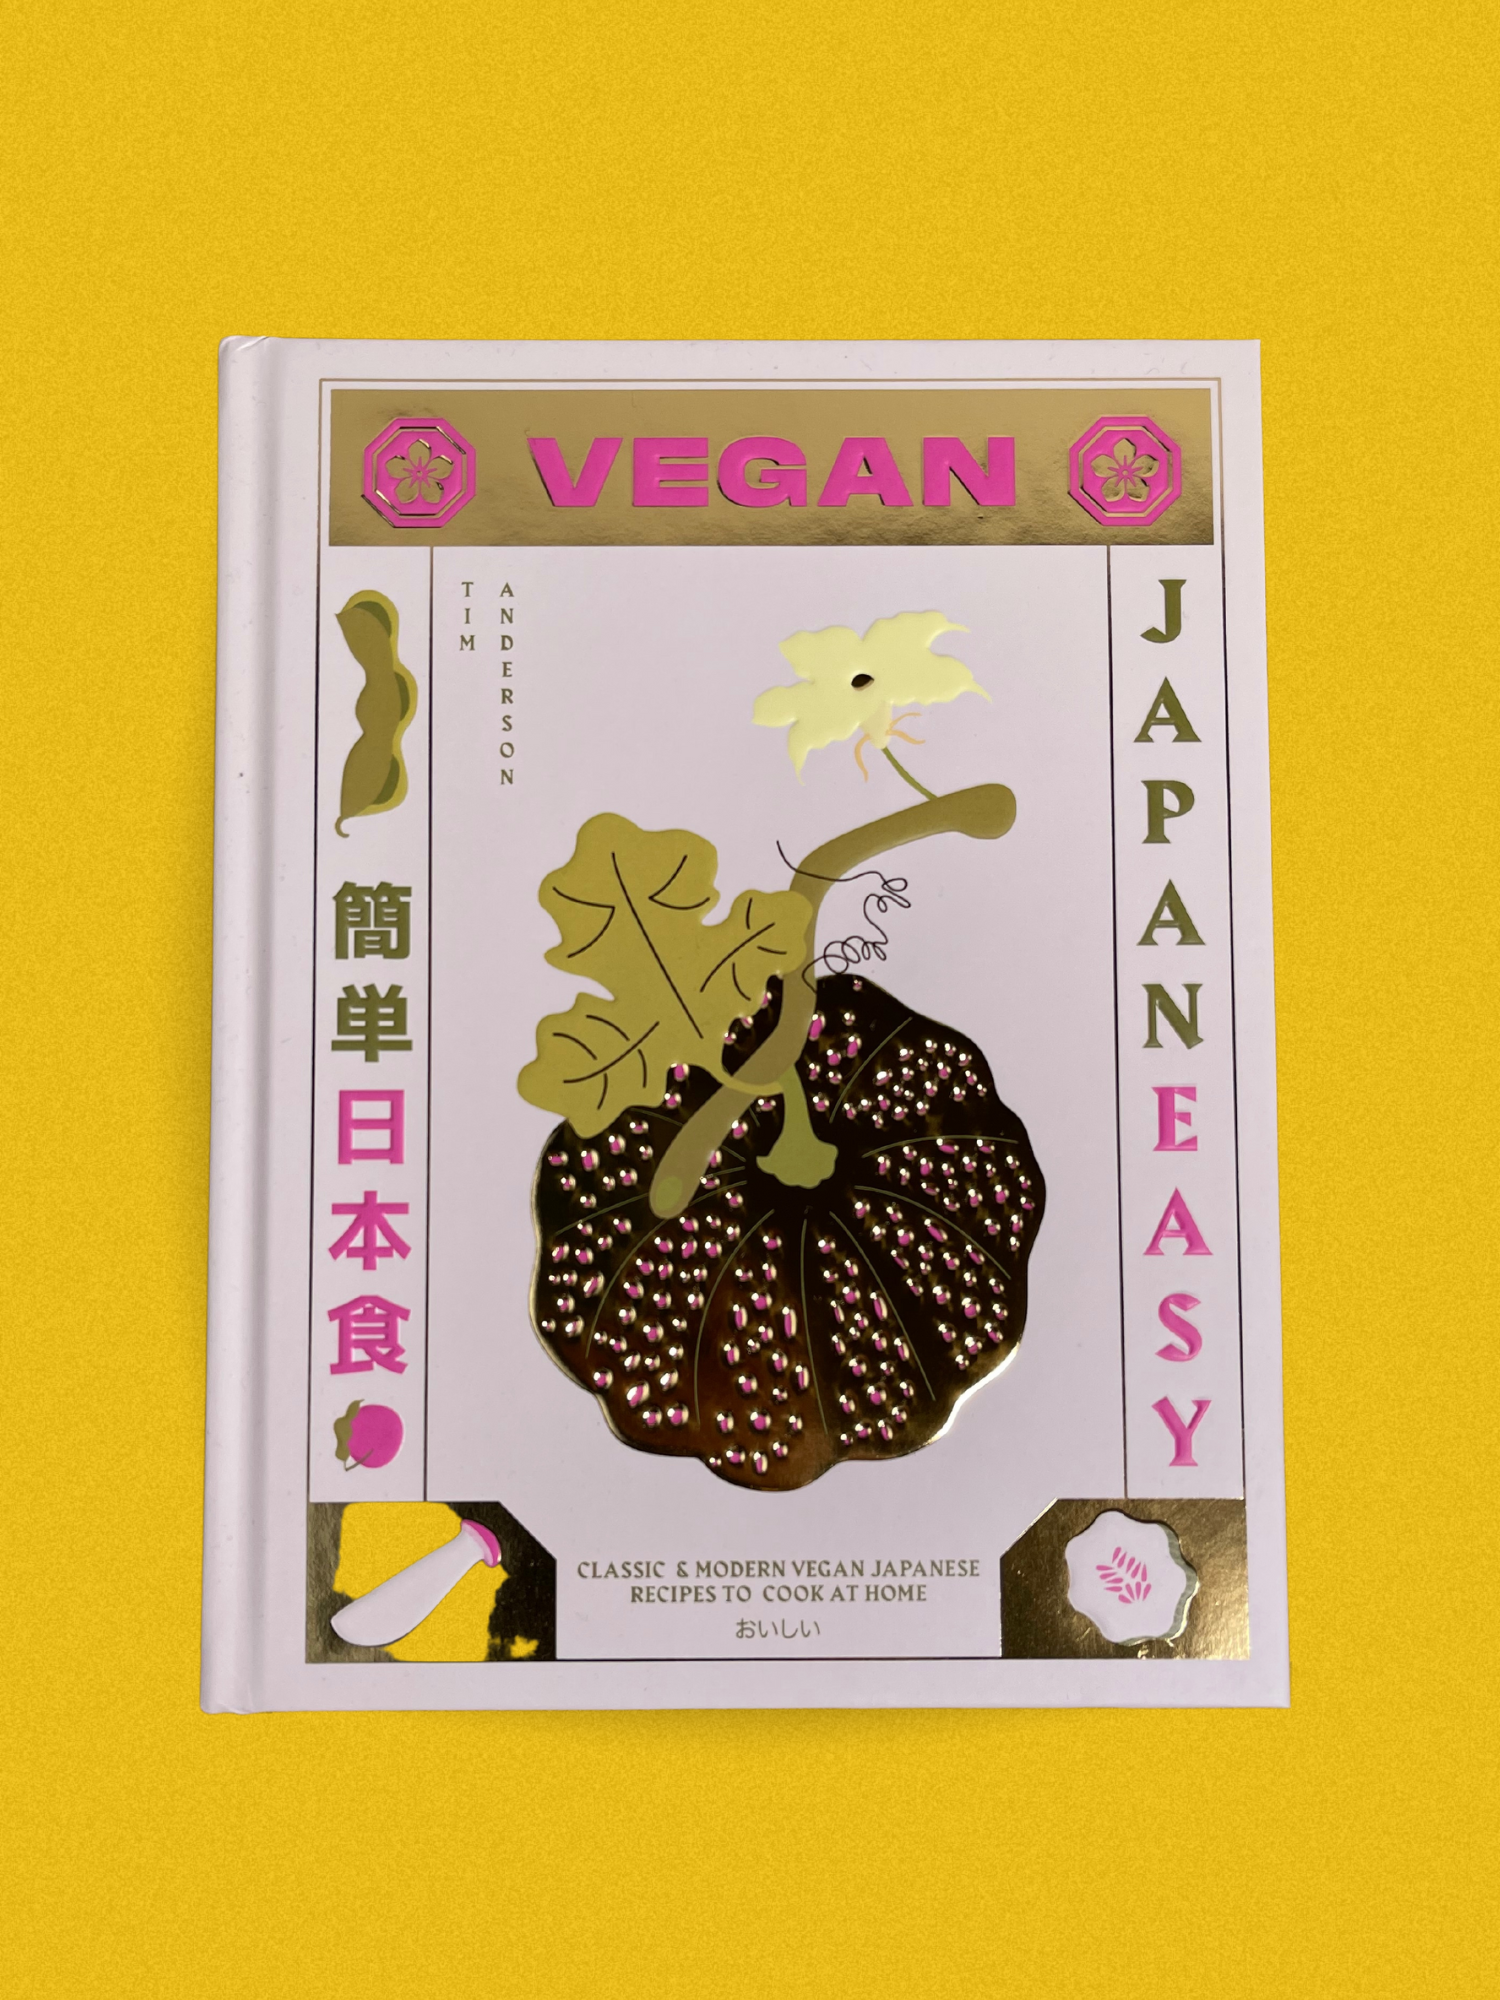 Vegan JapanEasy : Classic & Modern Vegan Japanese